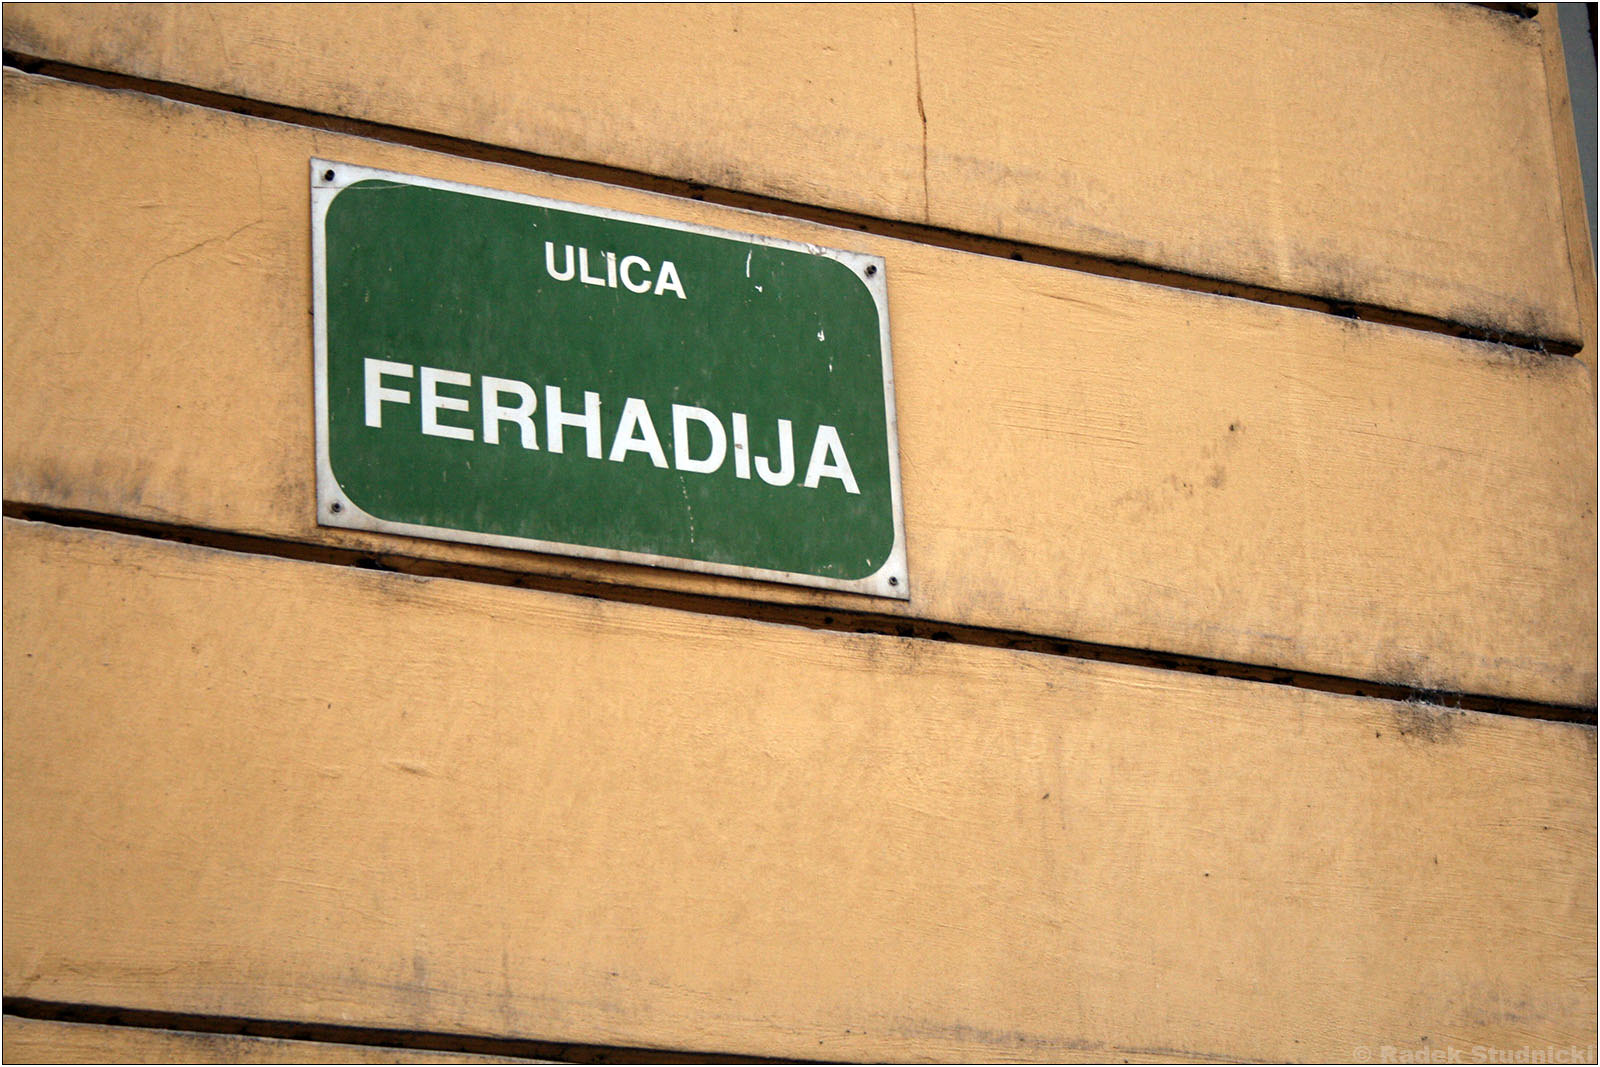 Ulica Ferhadija